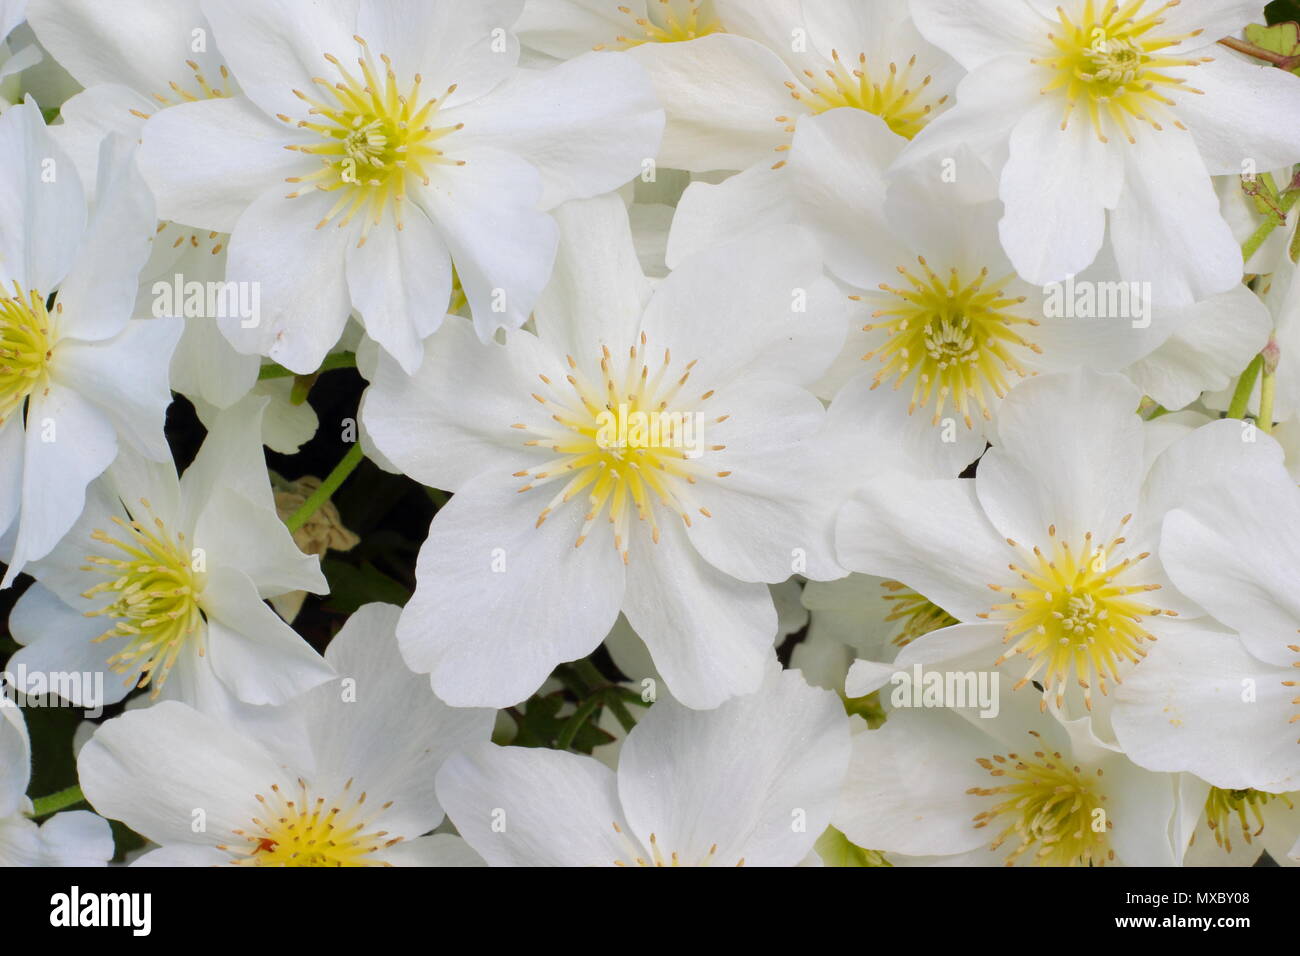 La clematide cartmanii "valanga", un arbusto sempreverde, nessun prune clematis, in fiore in primavera, REGNO UNITO Foto Stock